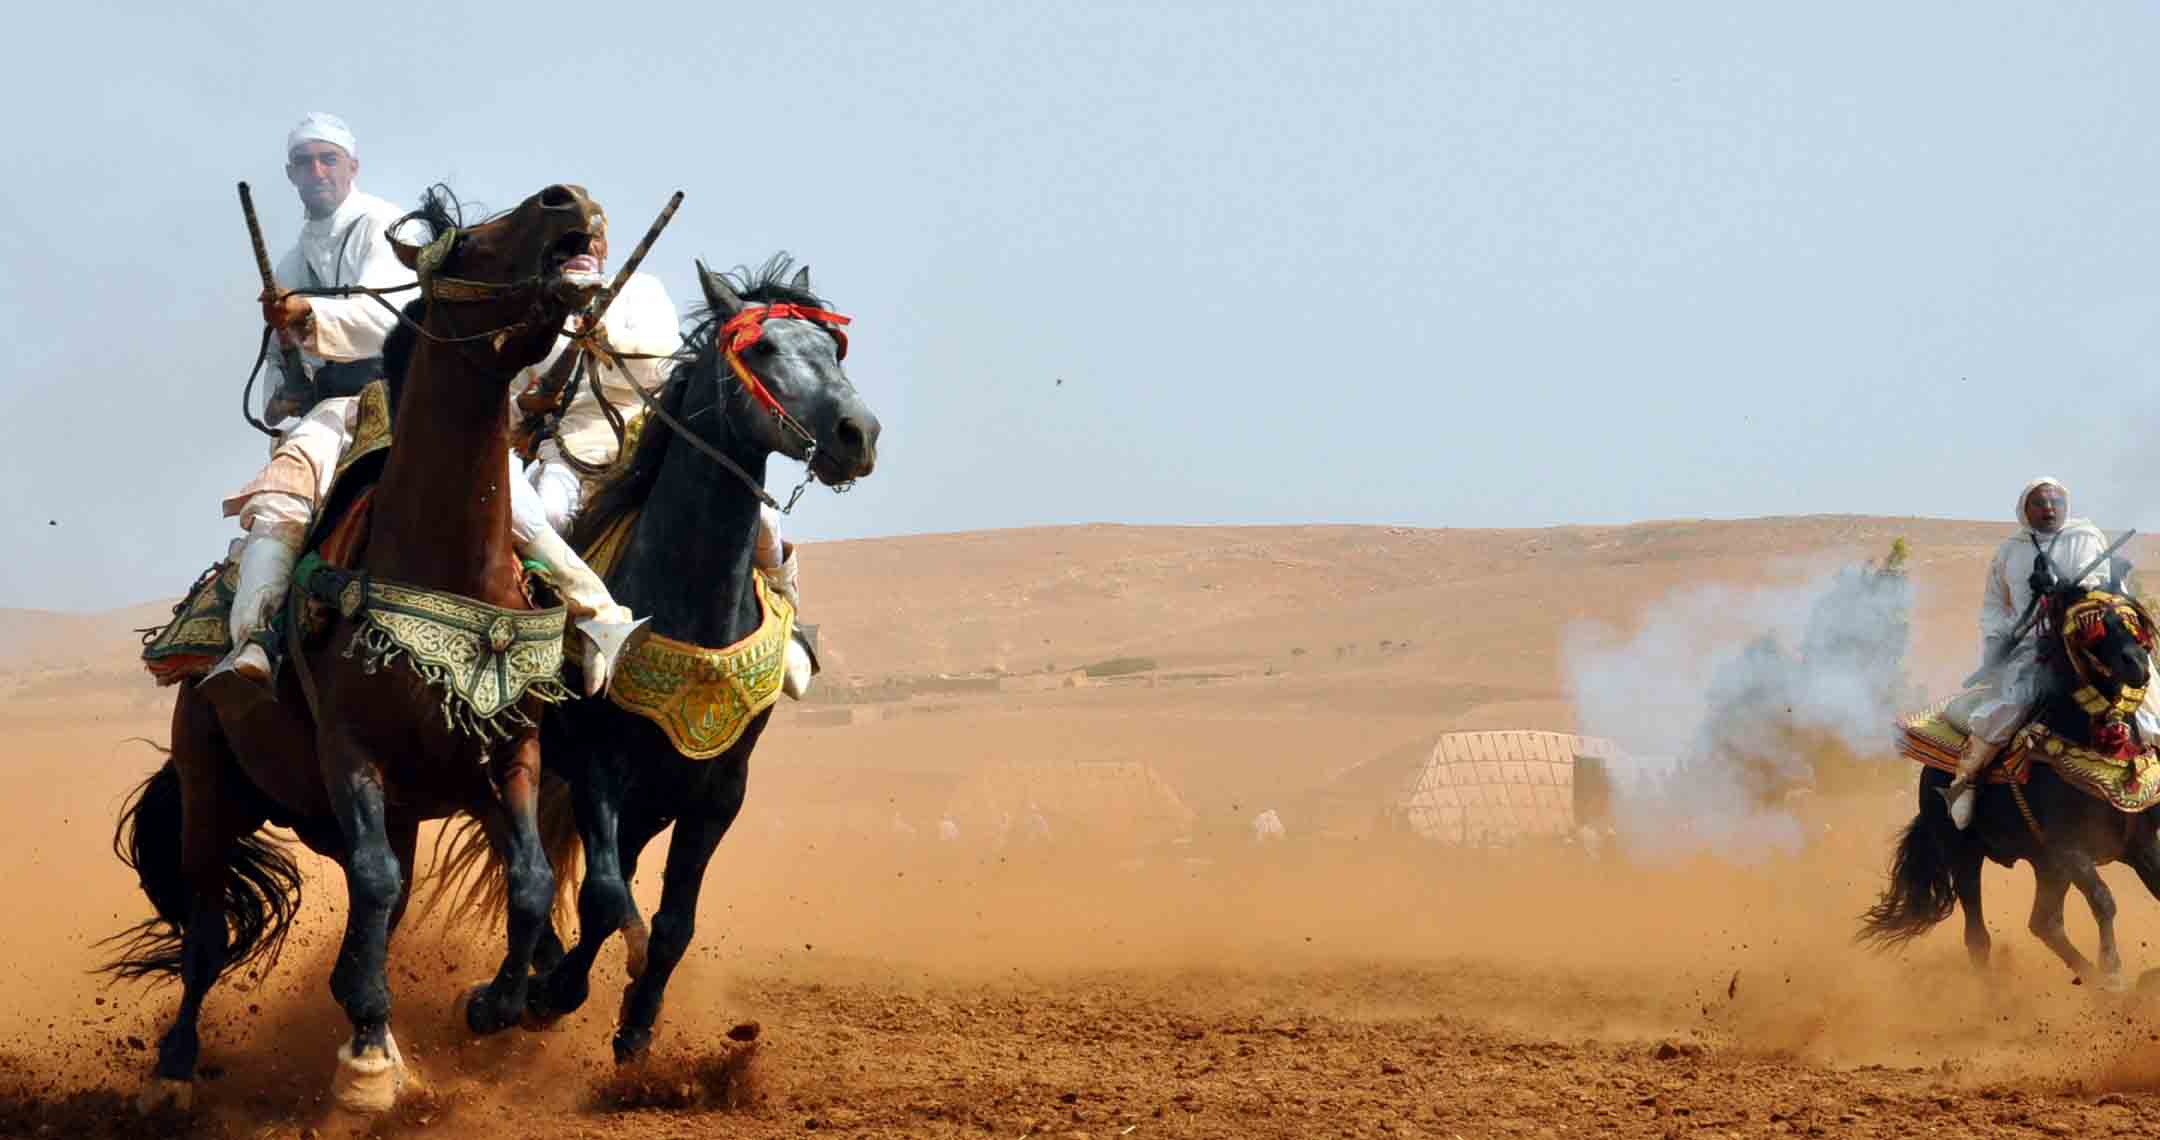 La fantasia s'inscrit comme grande tradition équestre au Maroc - © DR